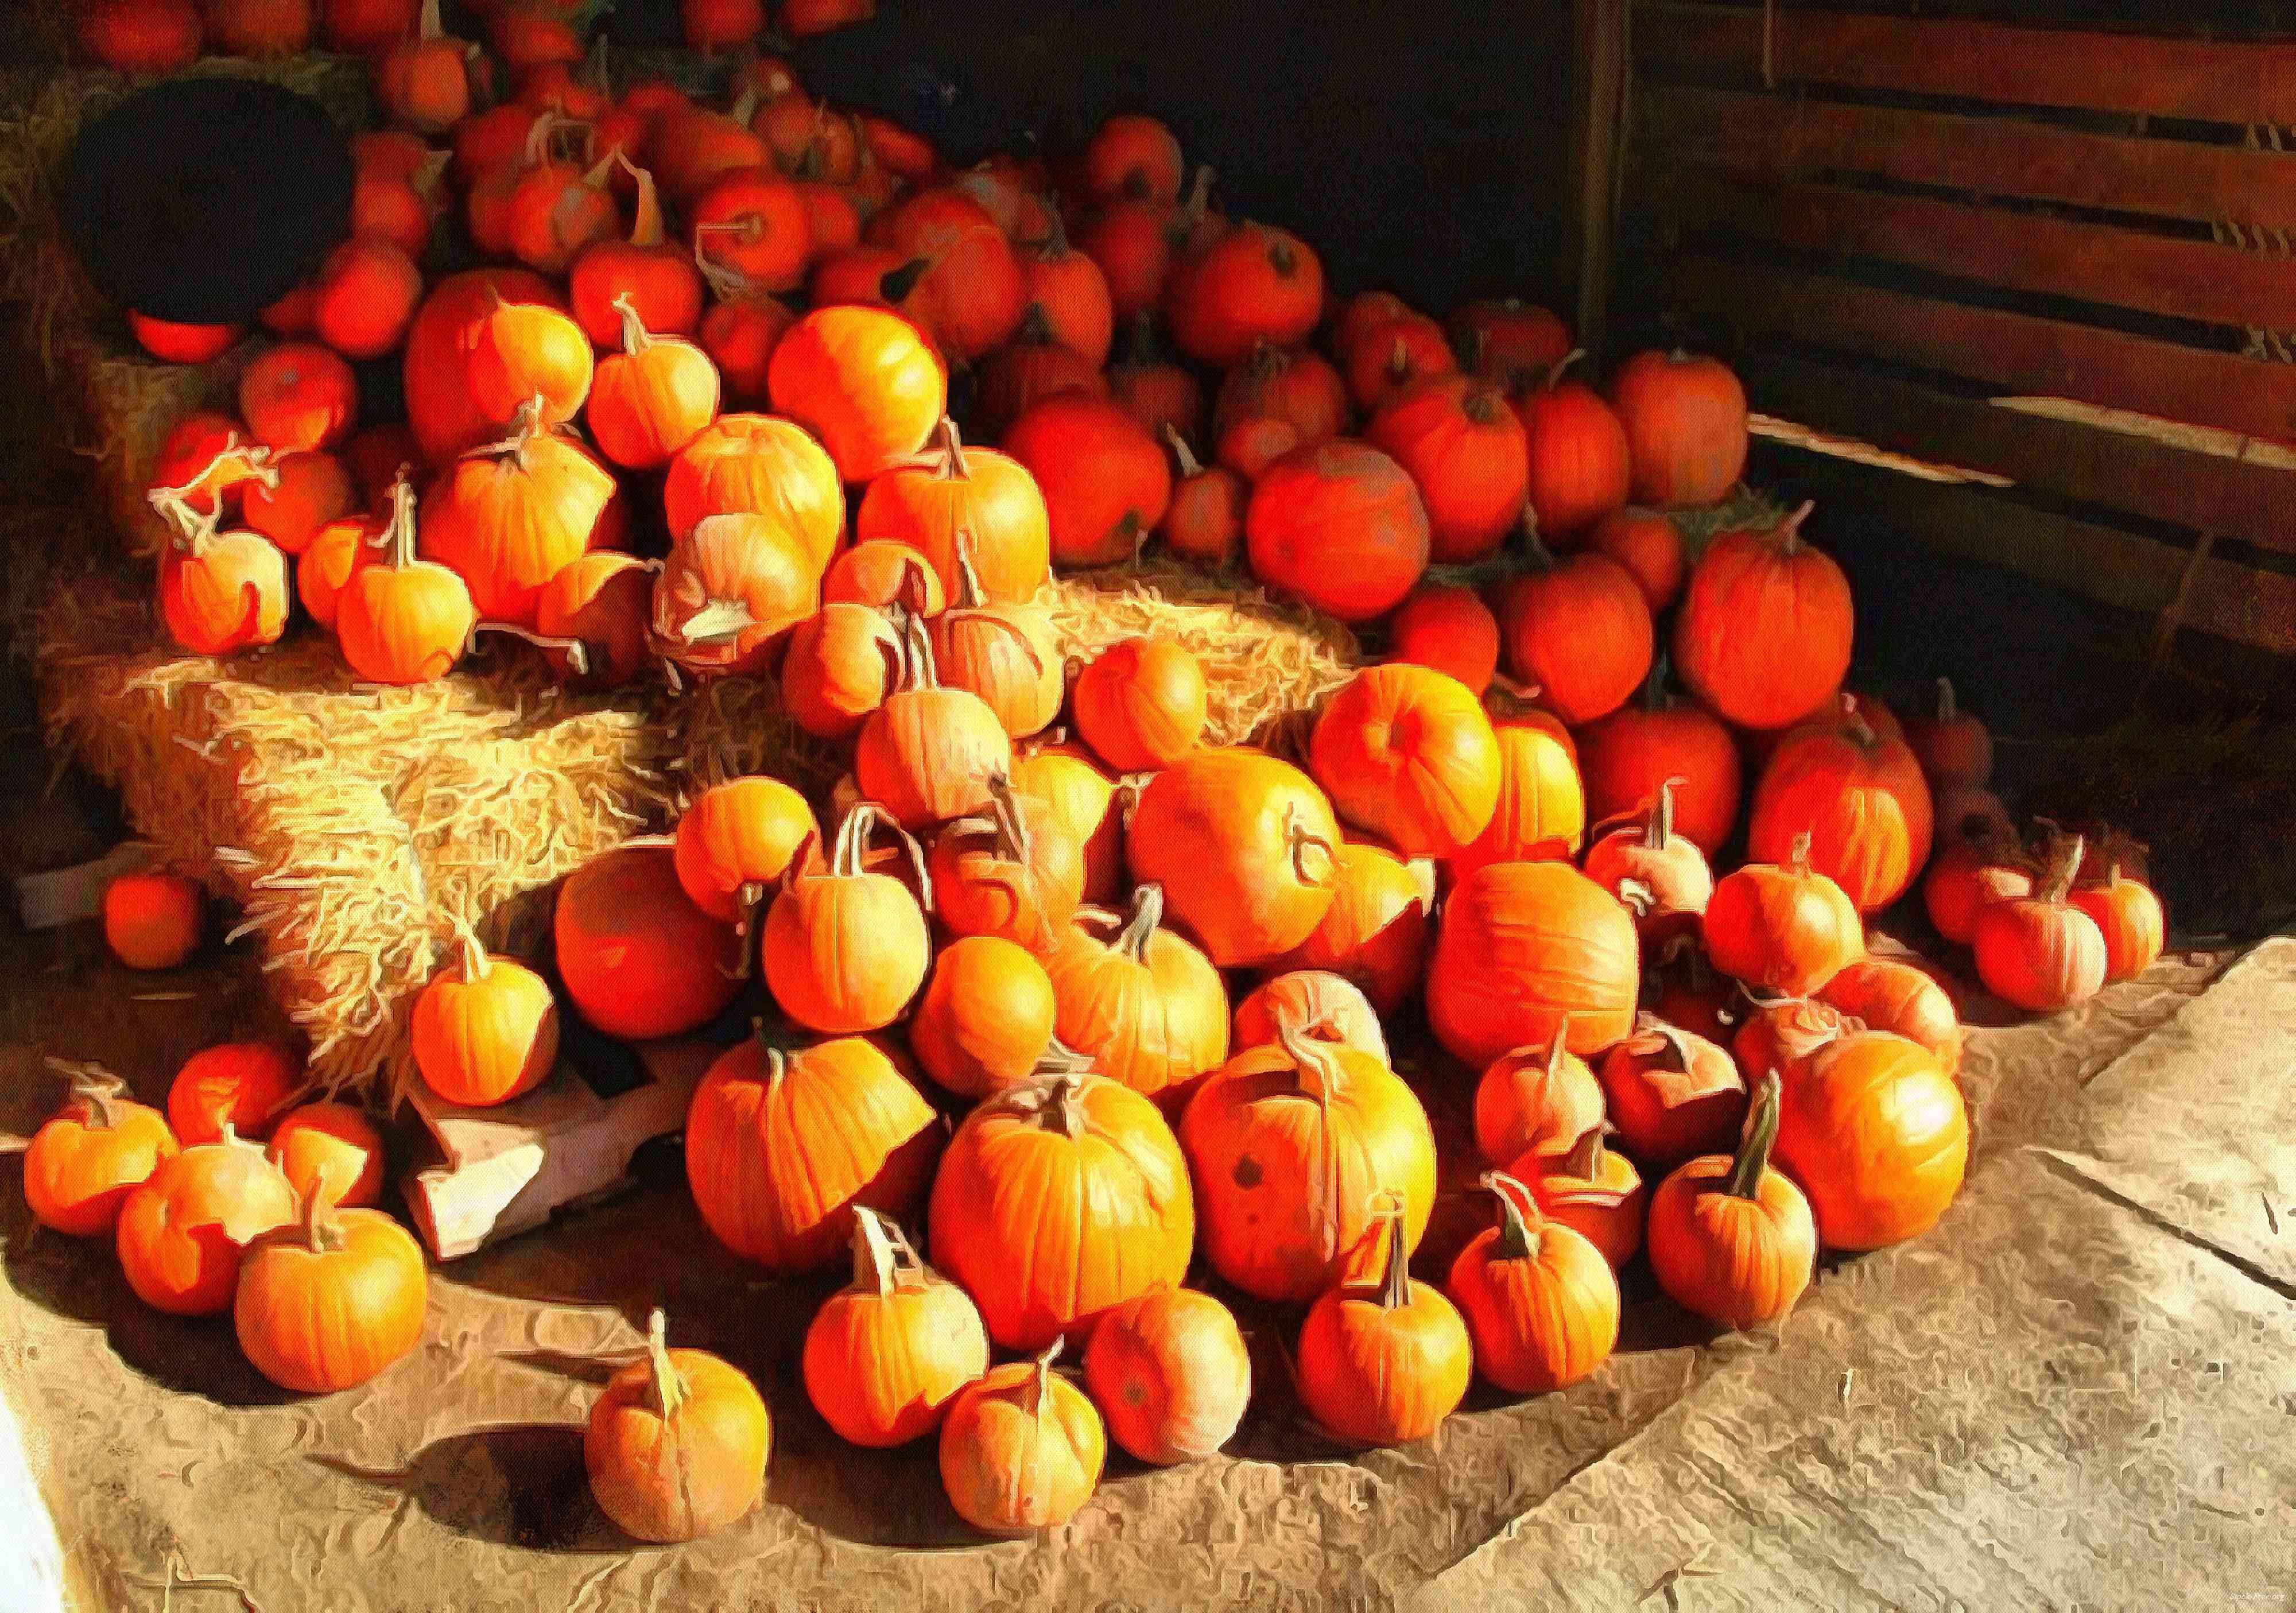 pumpkin, wheelbarrow, cart, trade, tray, stall, holiday, lots of pumpkins, garden, spooky, halloween -  stock free photos, public domain images, download free images, free stock images, public domain